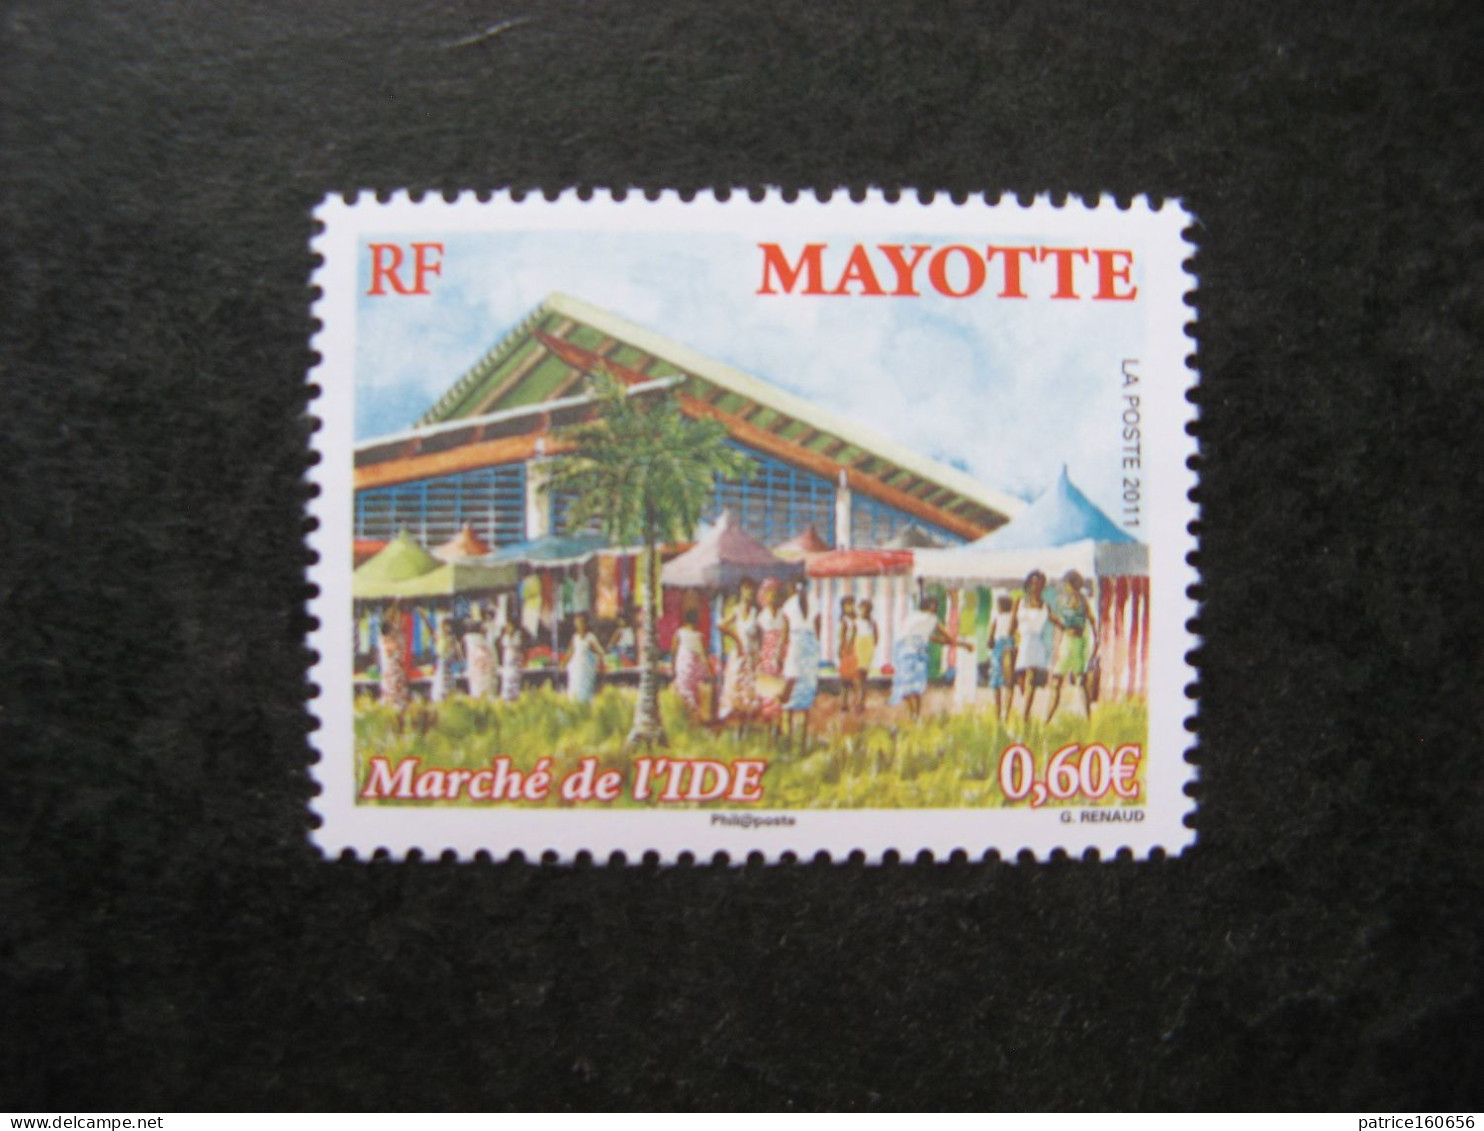 Mayotte: TB N° 256, Neuf XX . - Unused Stamps